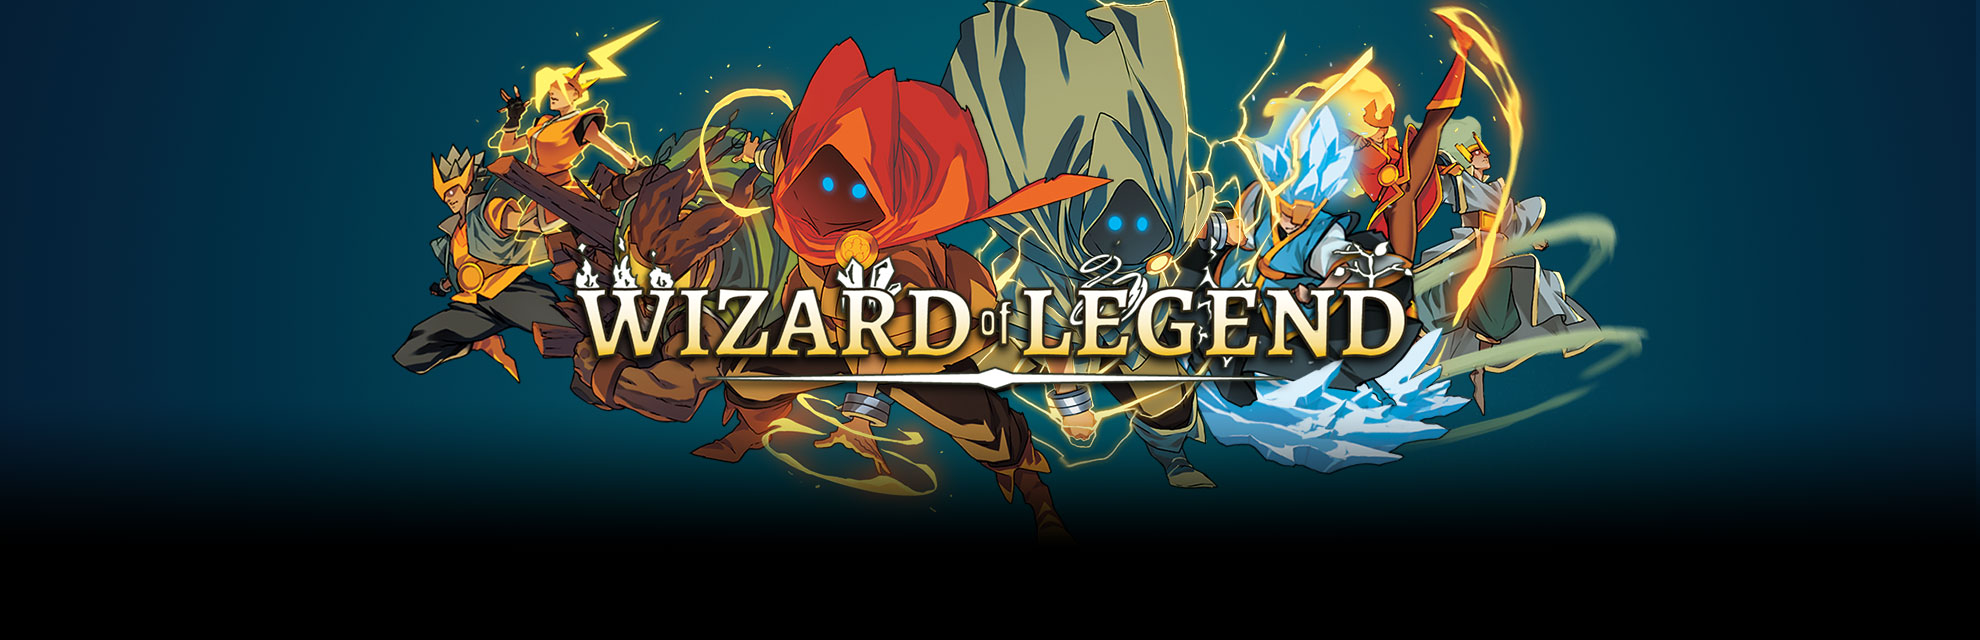 wizard of legend switch price